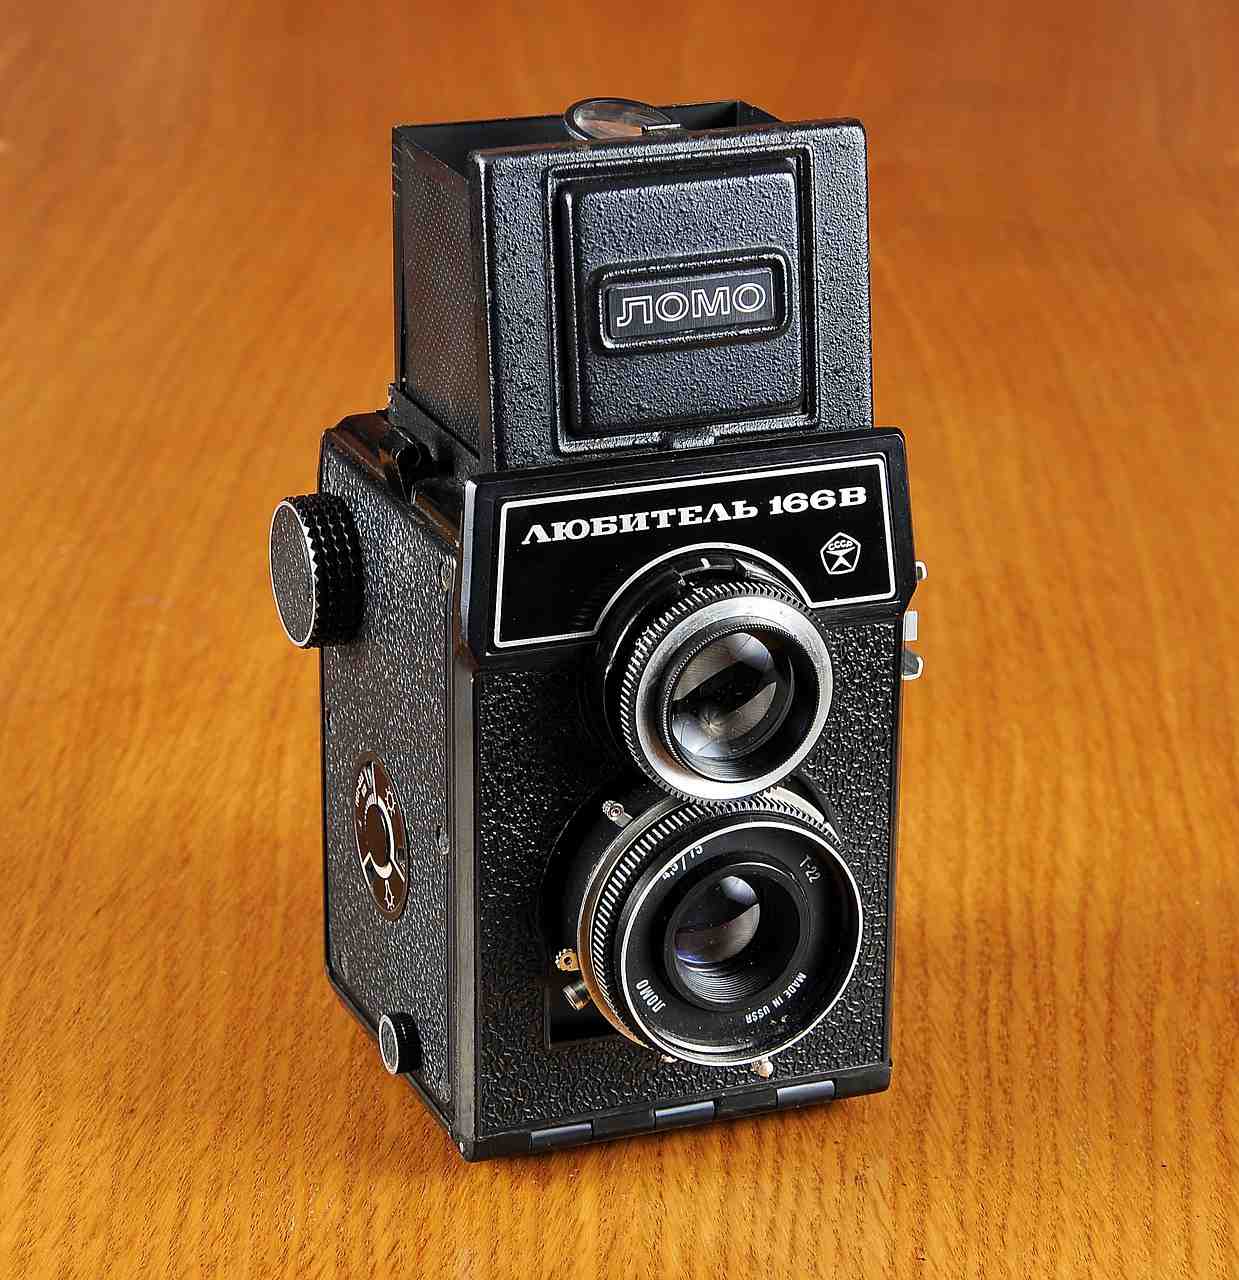 appareil photo, vieille caméra, lomo